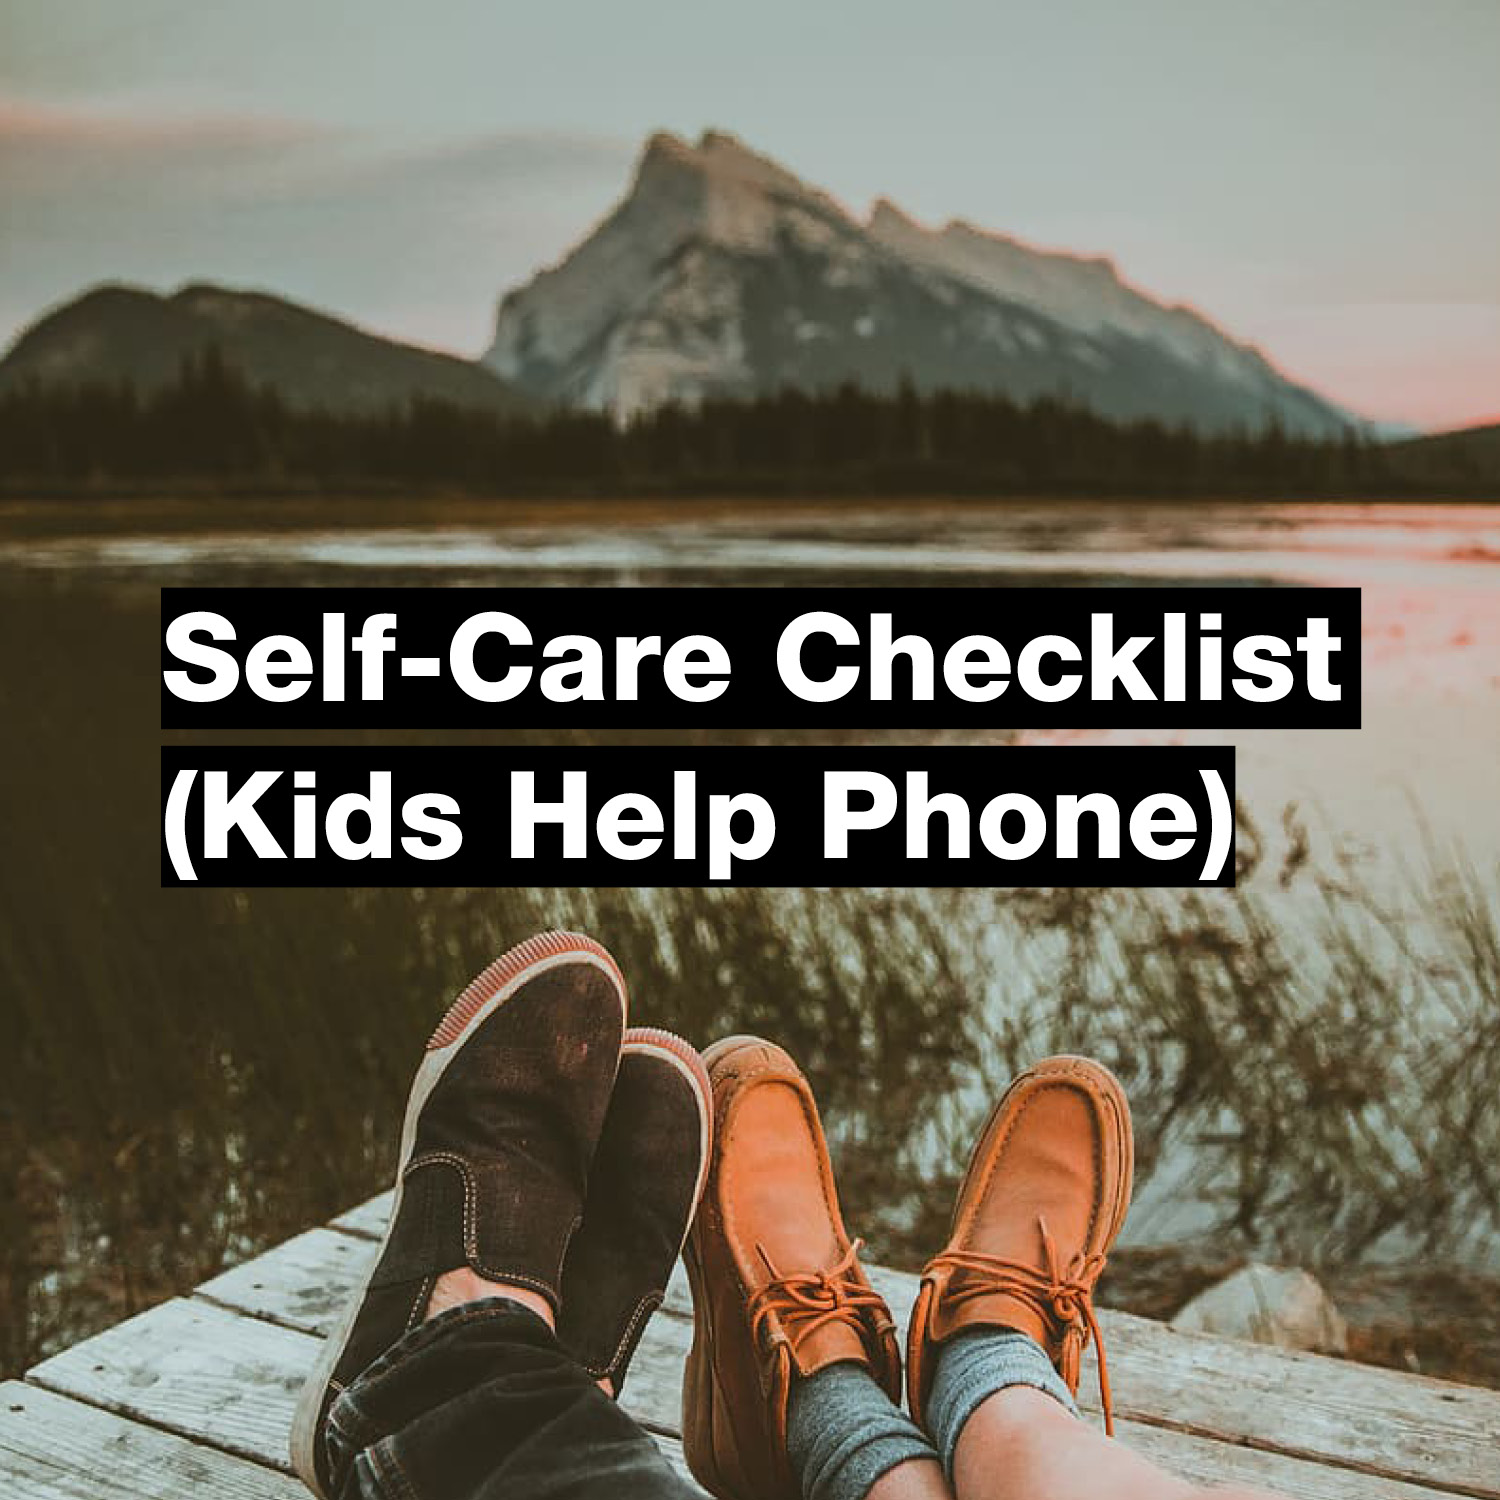 Self-Care Checklist (Kids Help Phone)